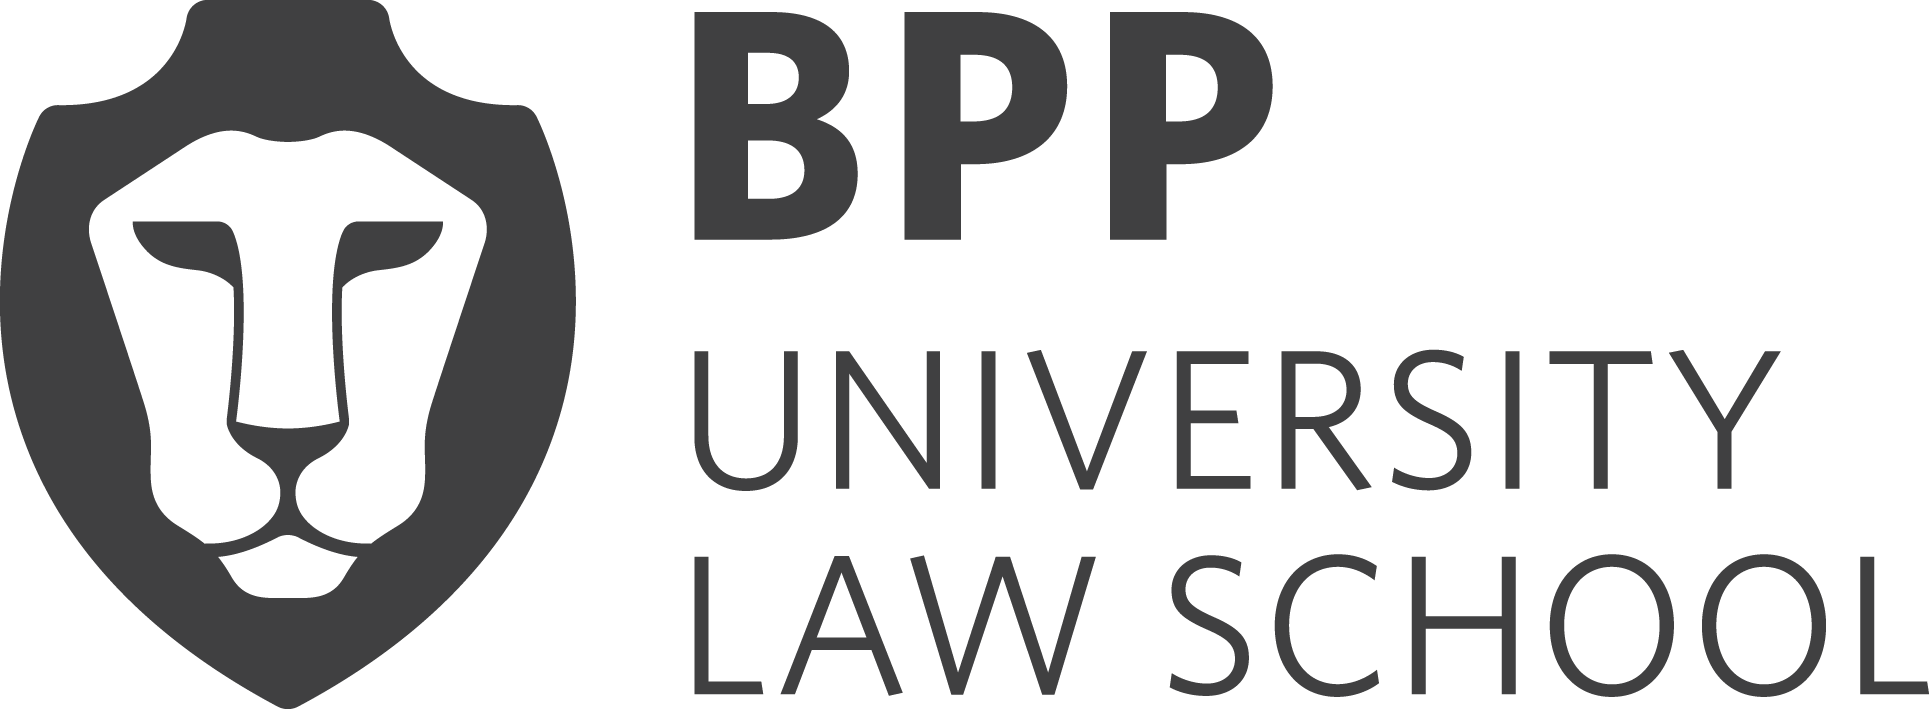 BPP University Law School (SQE) logo